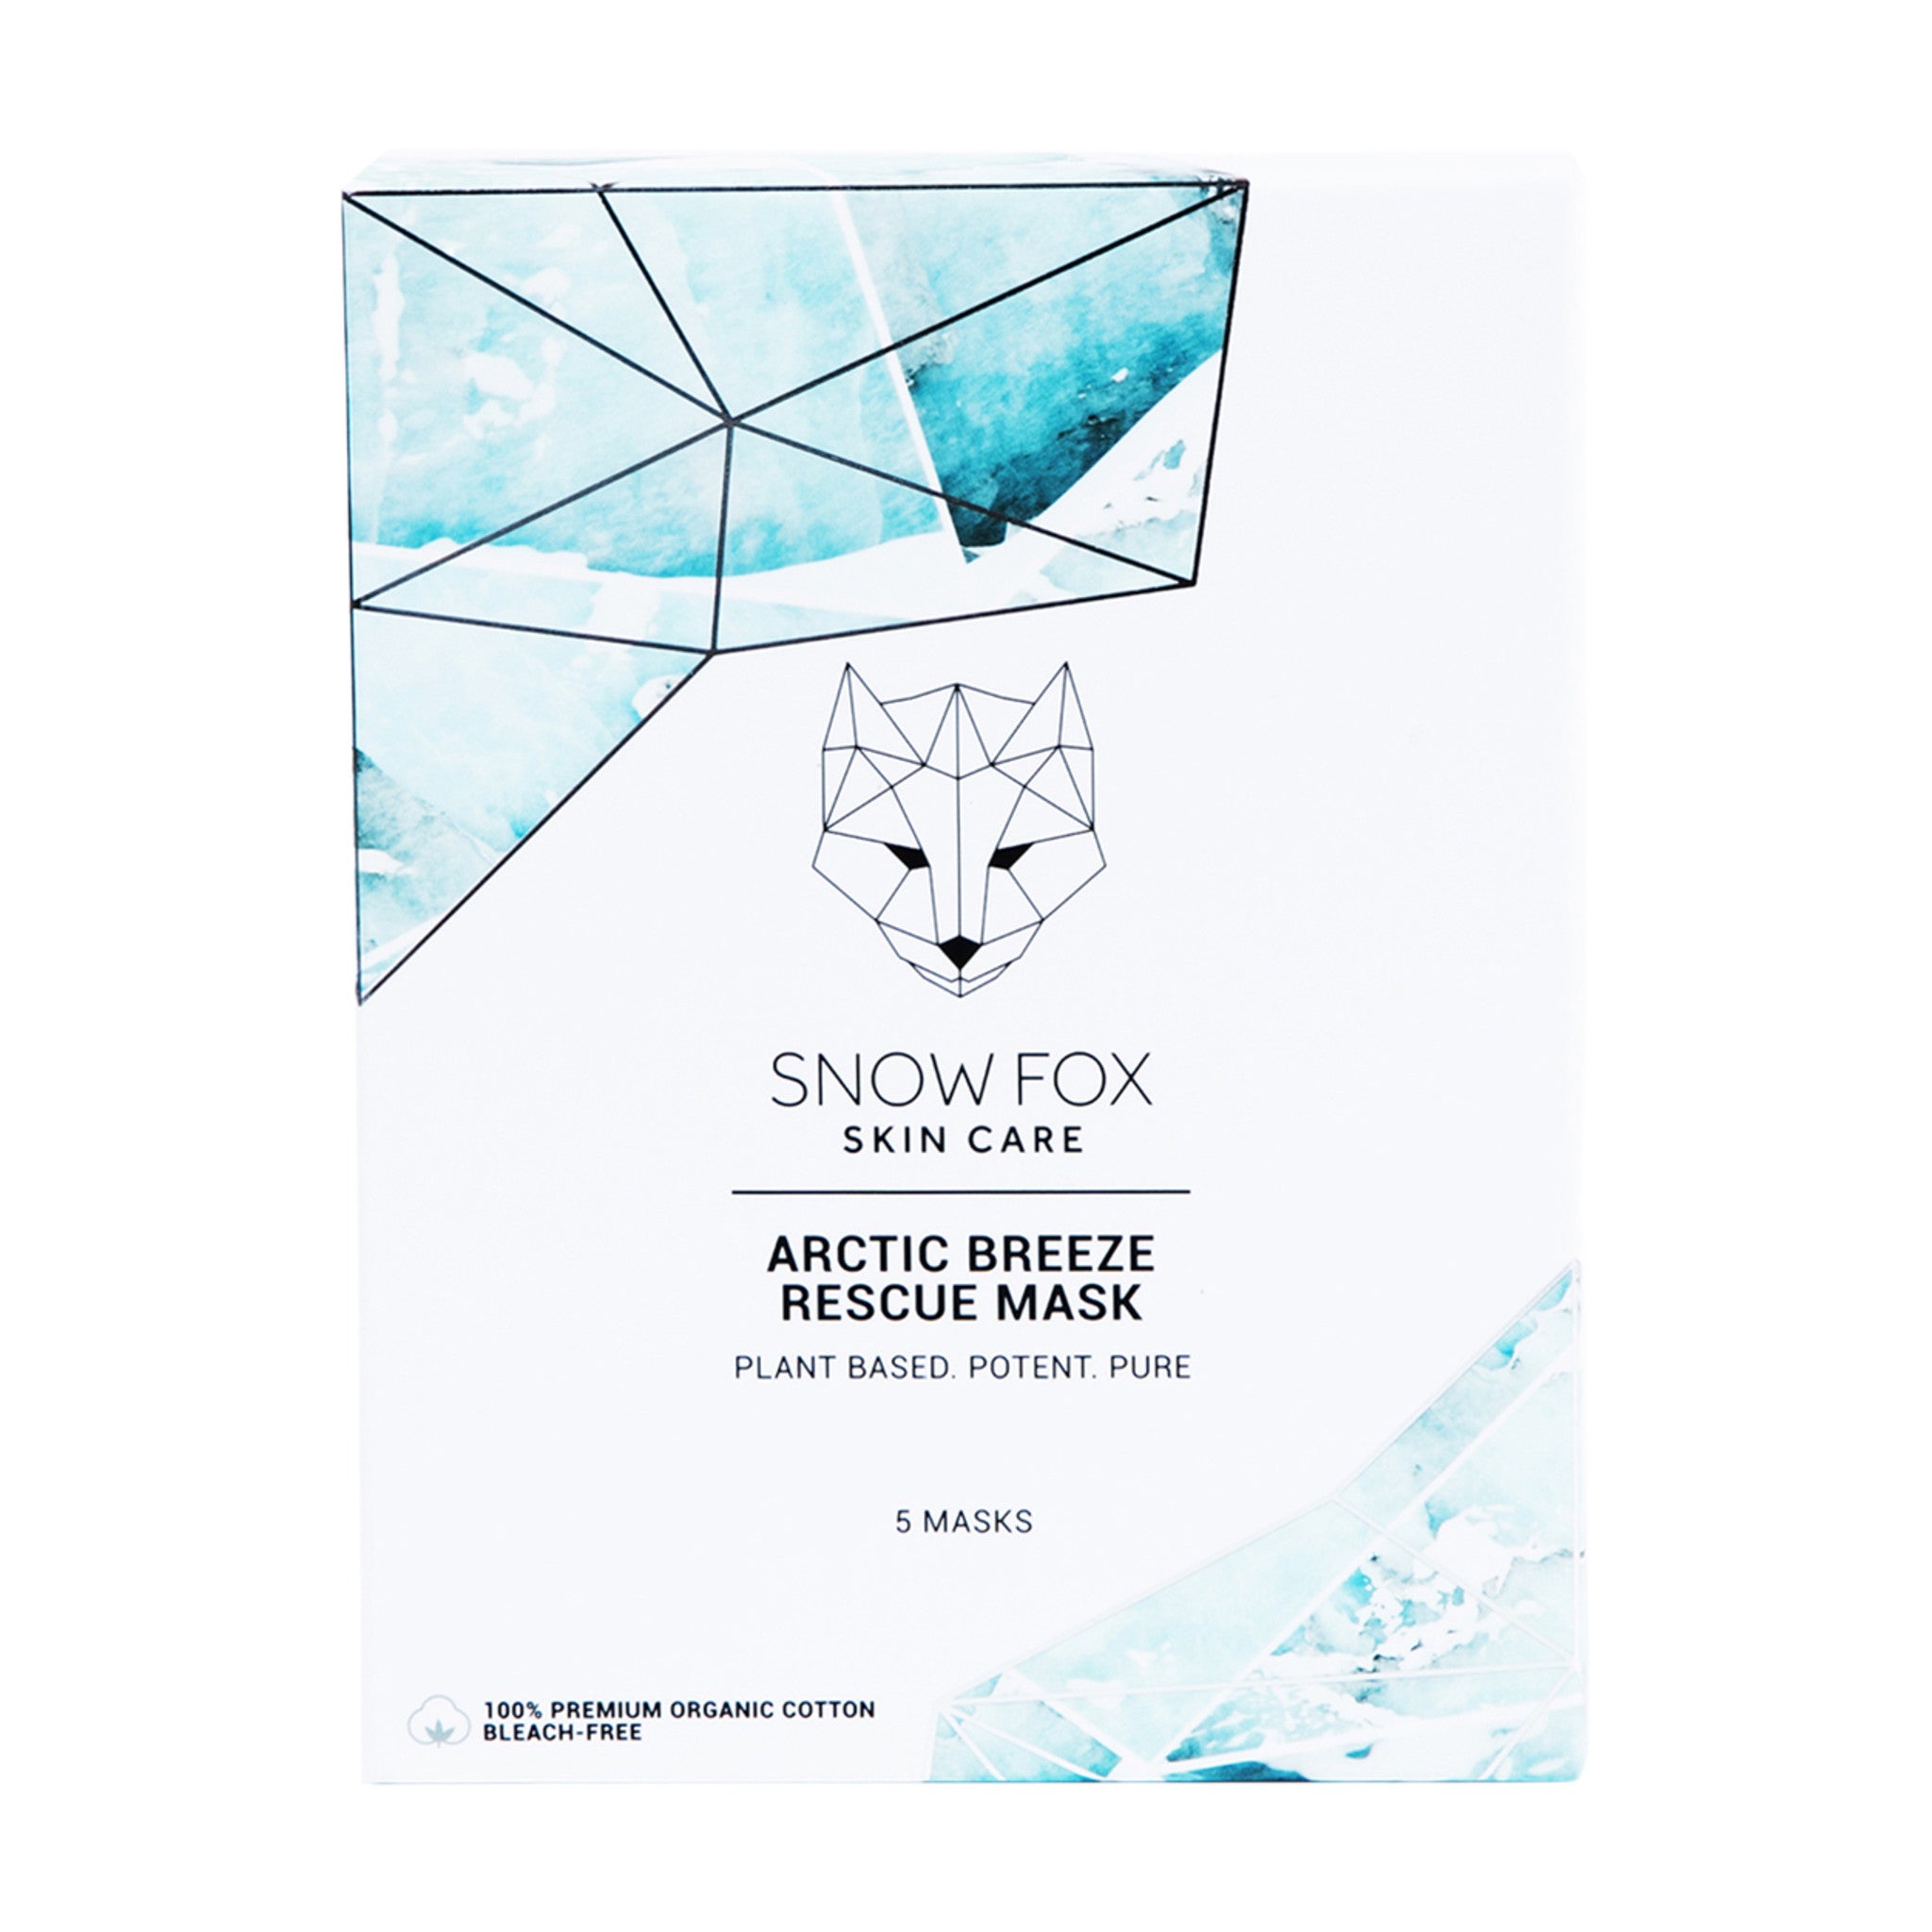 Snow Fox Skincare Arctic Breeze Rescue Mask Size variant: 5 Treatments main image.